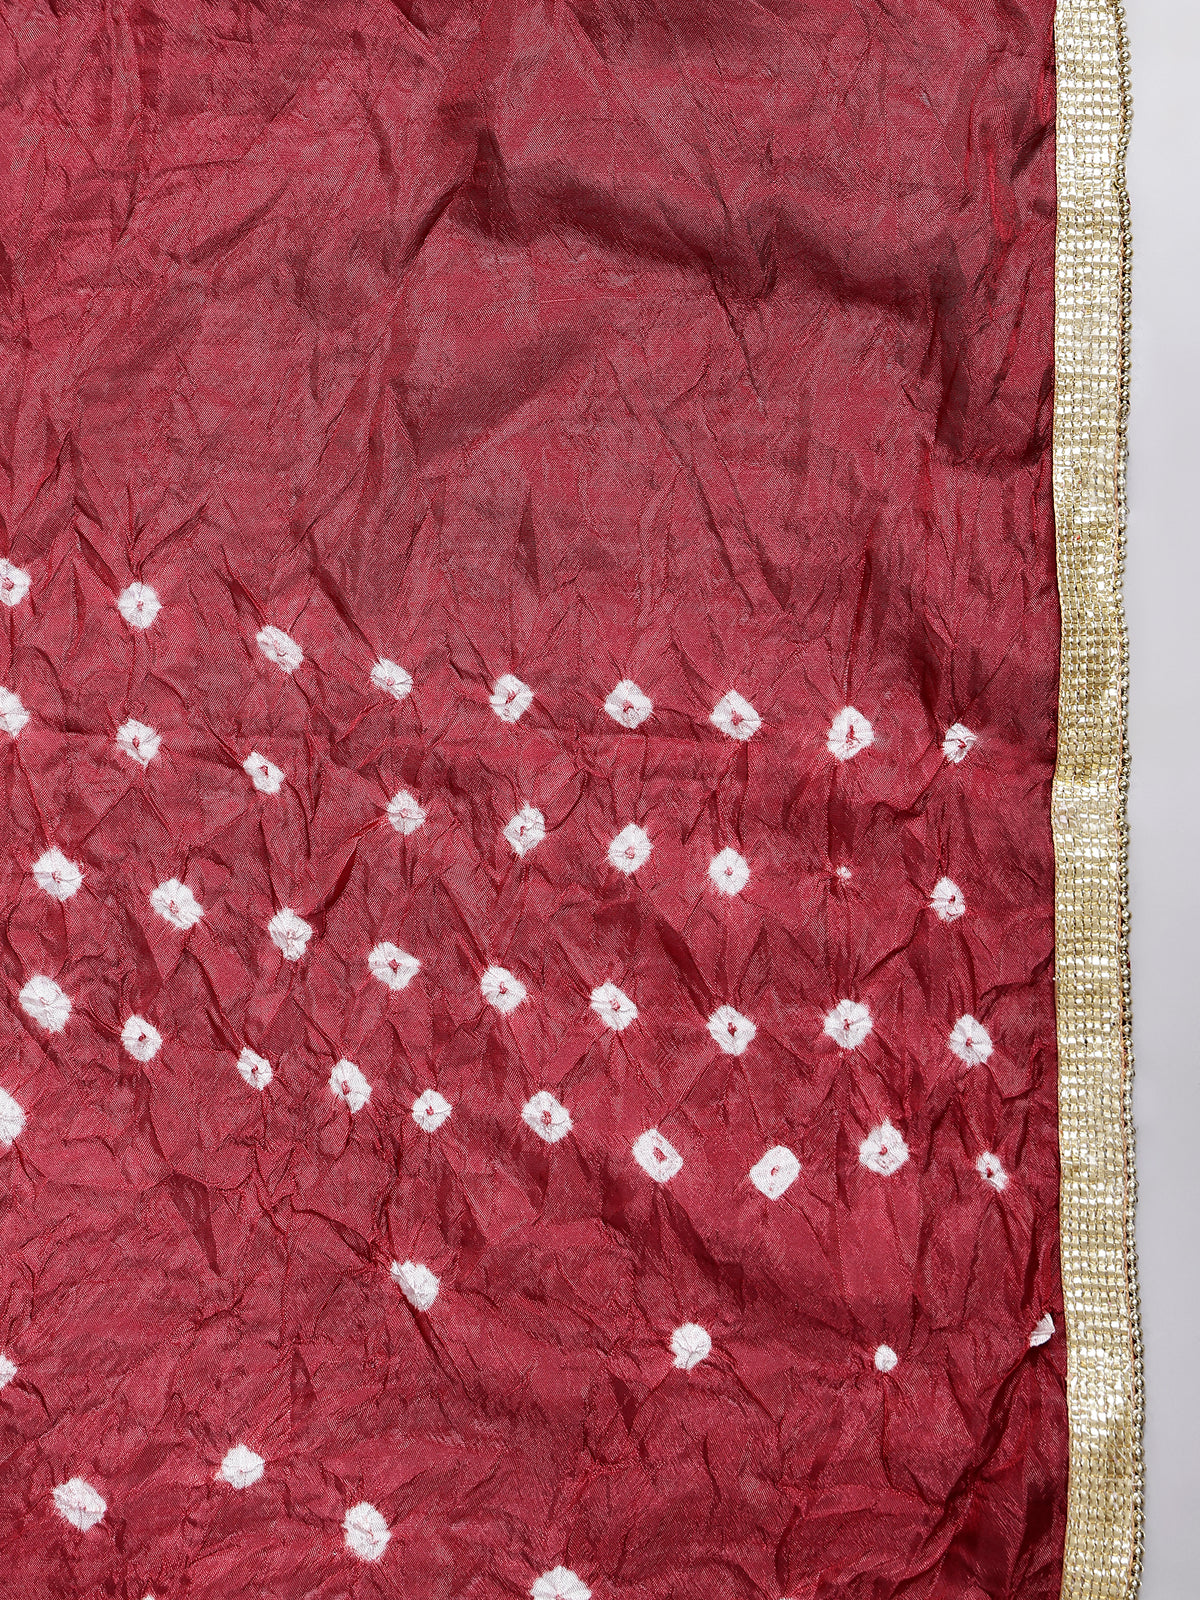 Jaipuri Chiffon Red Ethnic Bandhani Print Tie-Dye Dupatta with Golden Lace Border